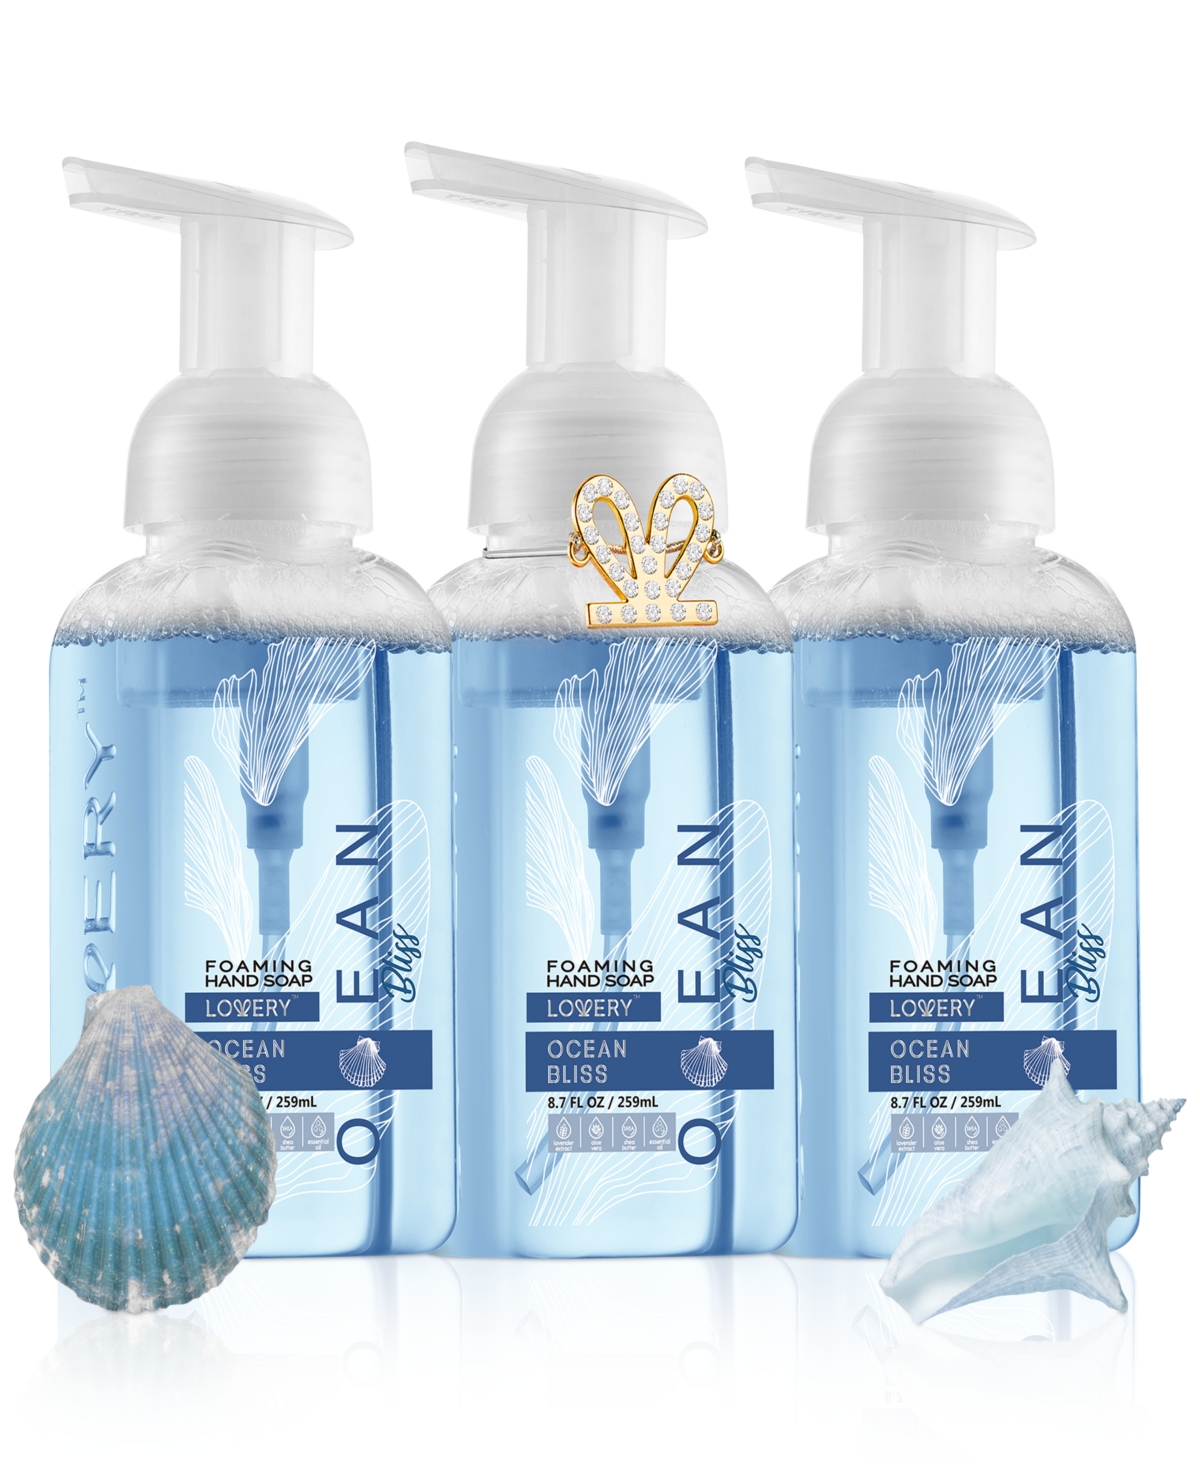 Lovery Hand Foaming Soap in Ocean Bliss, Moisturizing Hand Soap with Flawless Crystal Heart Bracelet - Hand Wash Set, 4 Piece